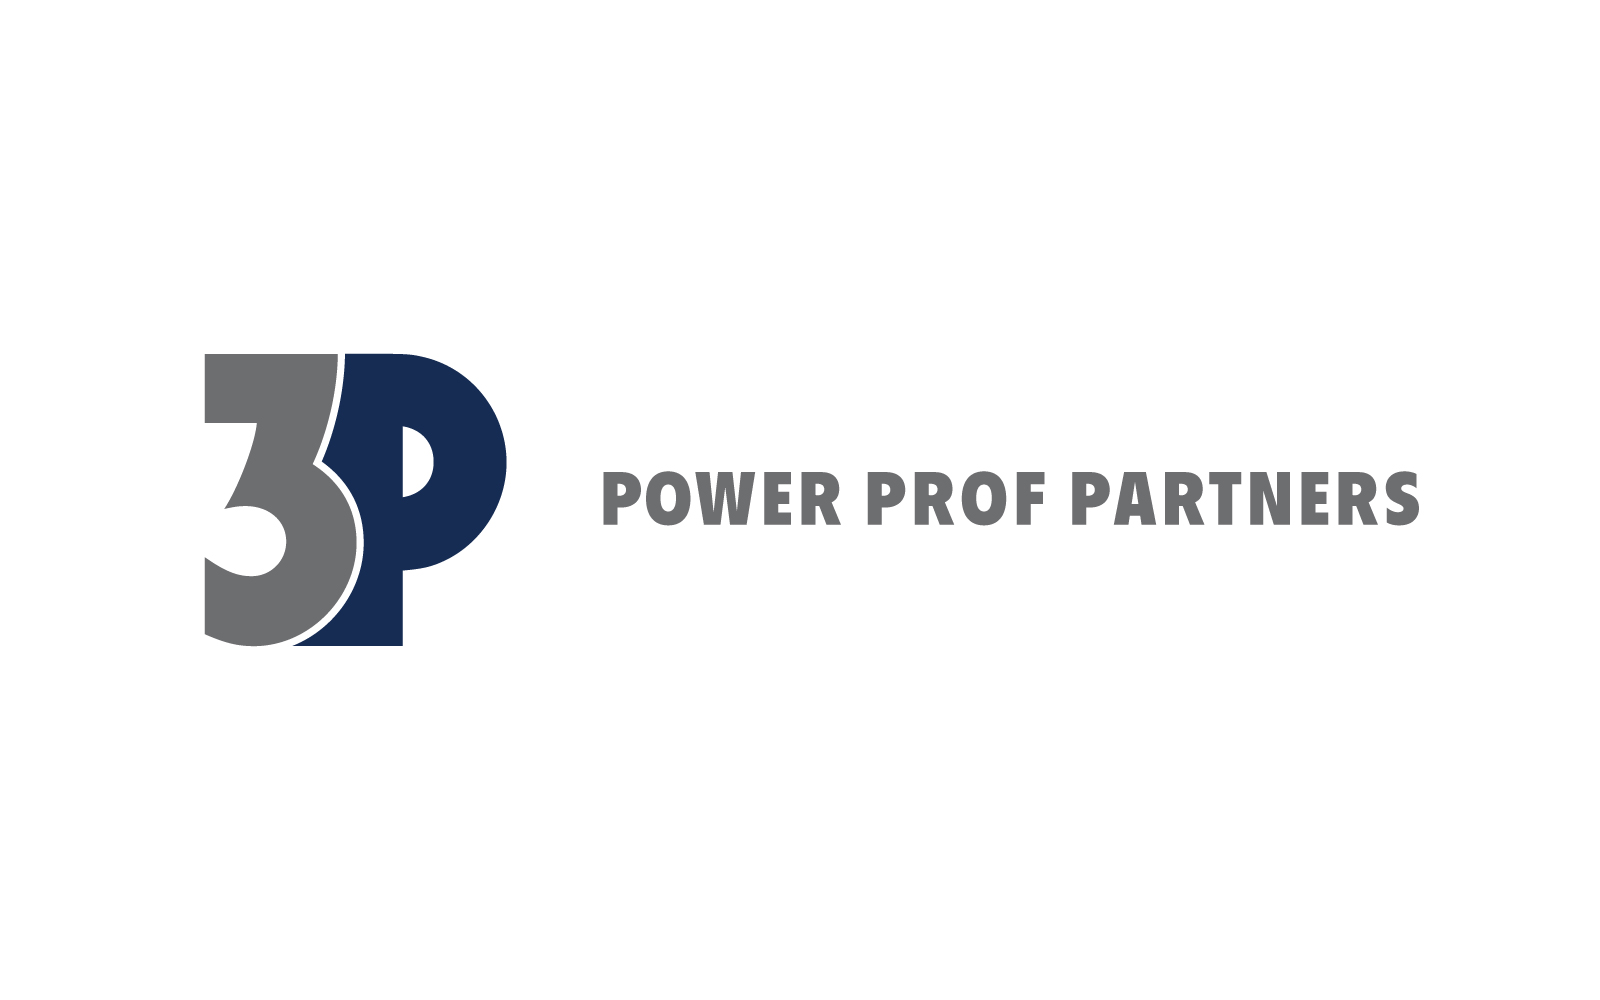 3P / Power Prof Partners Logo